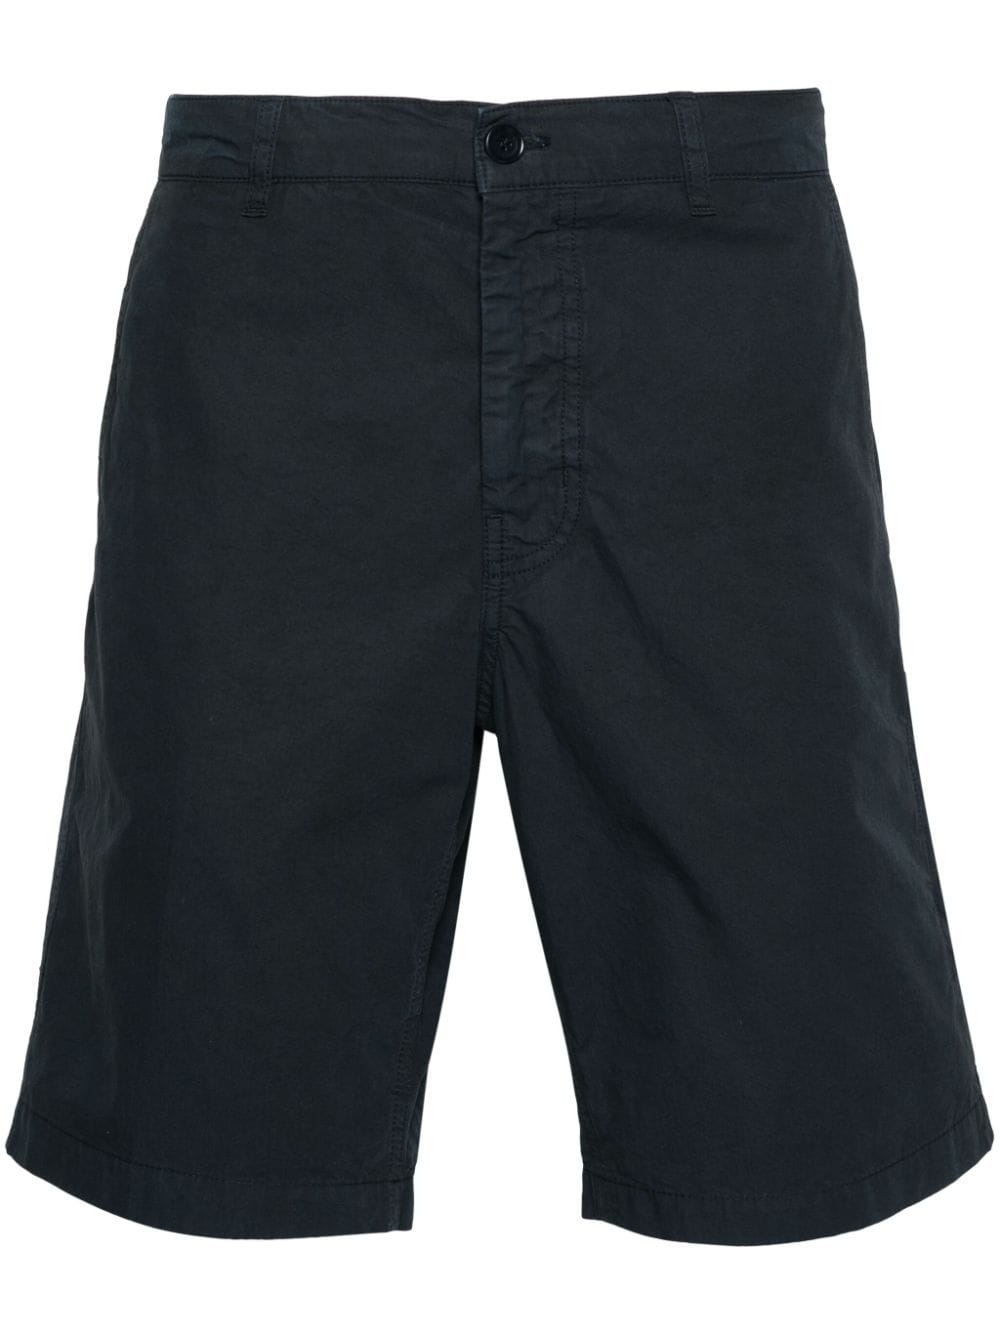 pressed-crease cotton shorts - 1